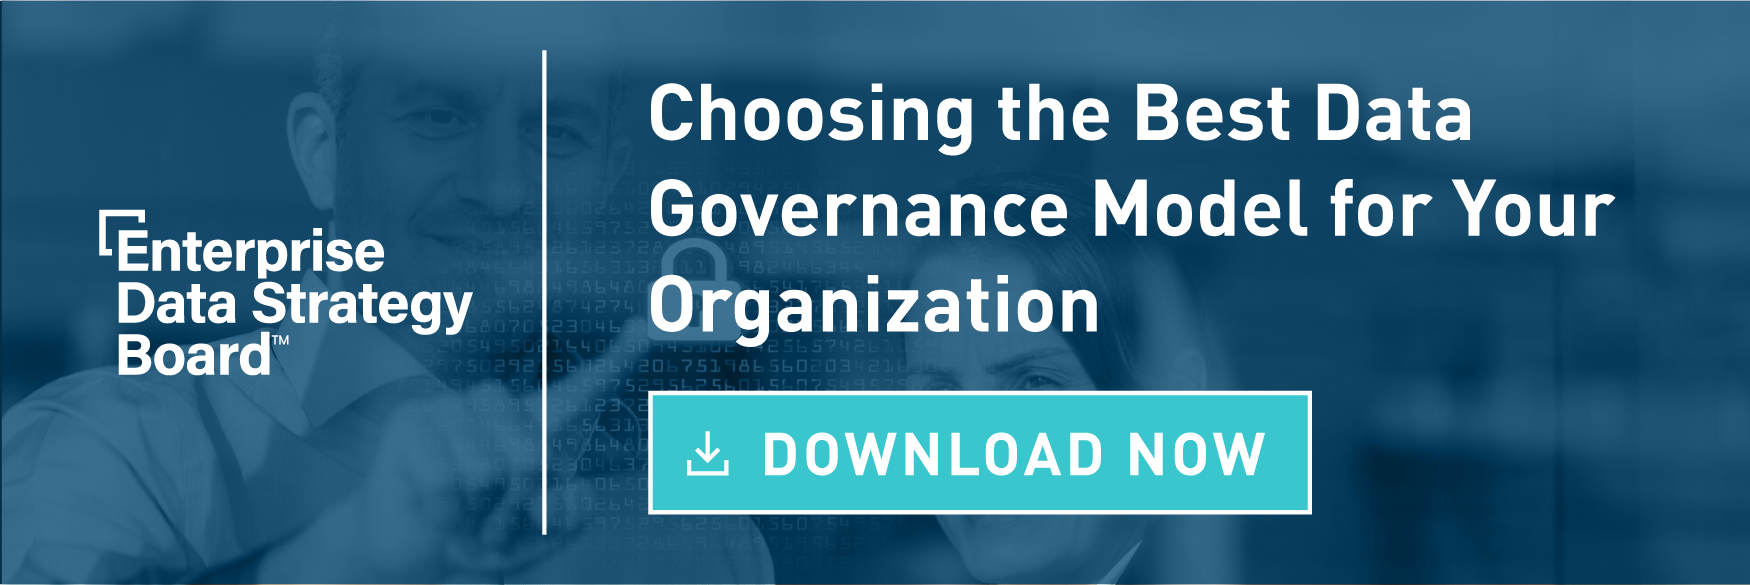 Choosing the Best Data Governance Model for Your Organization